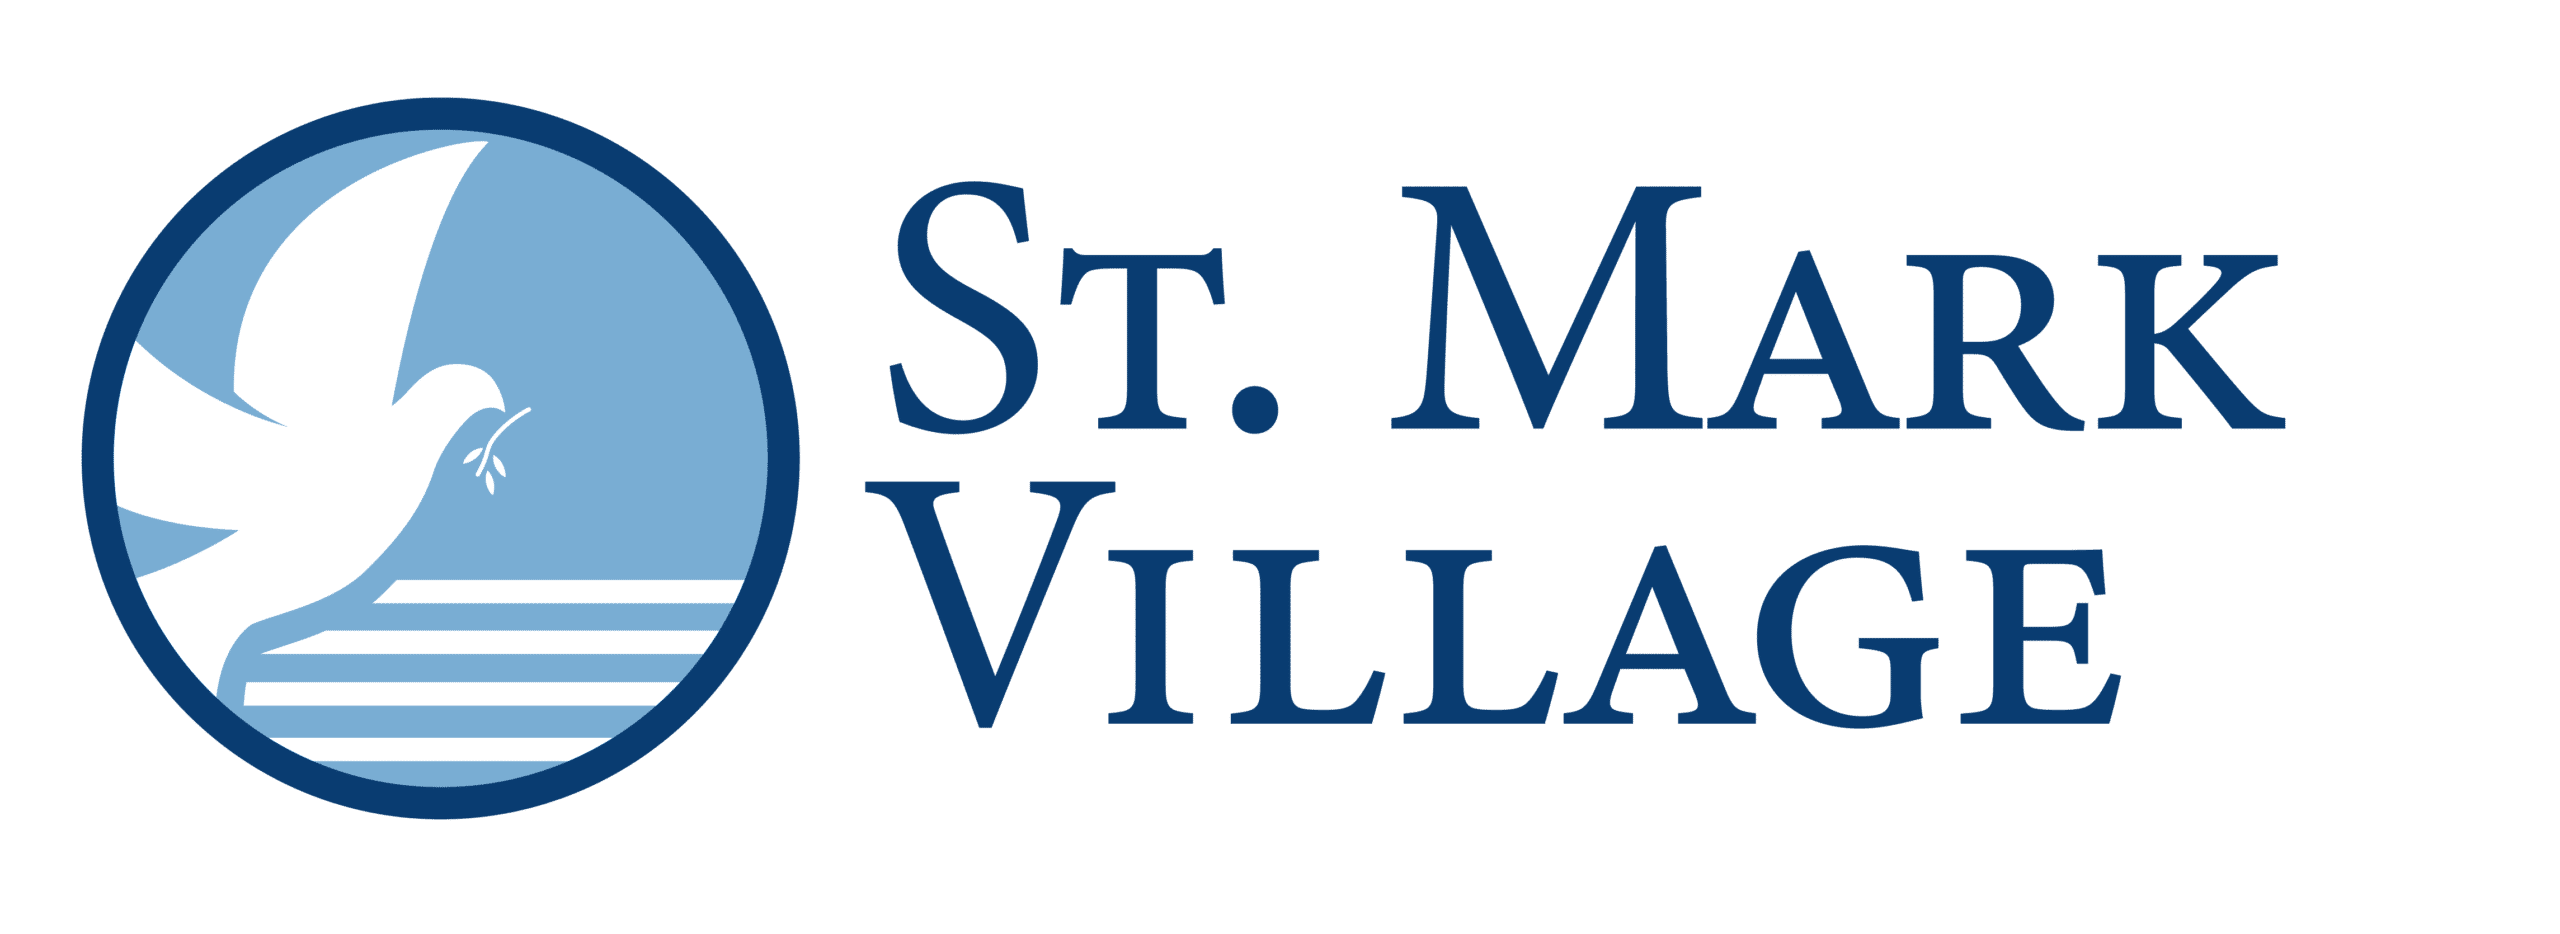 St mark village logo on a green background.